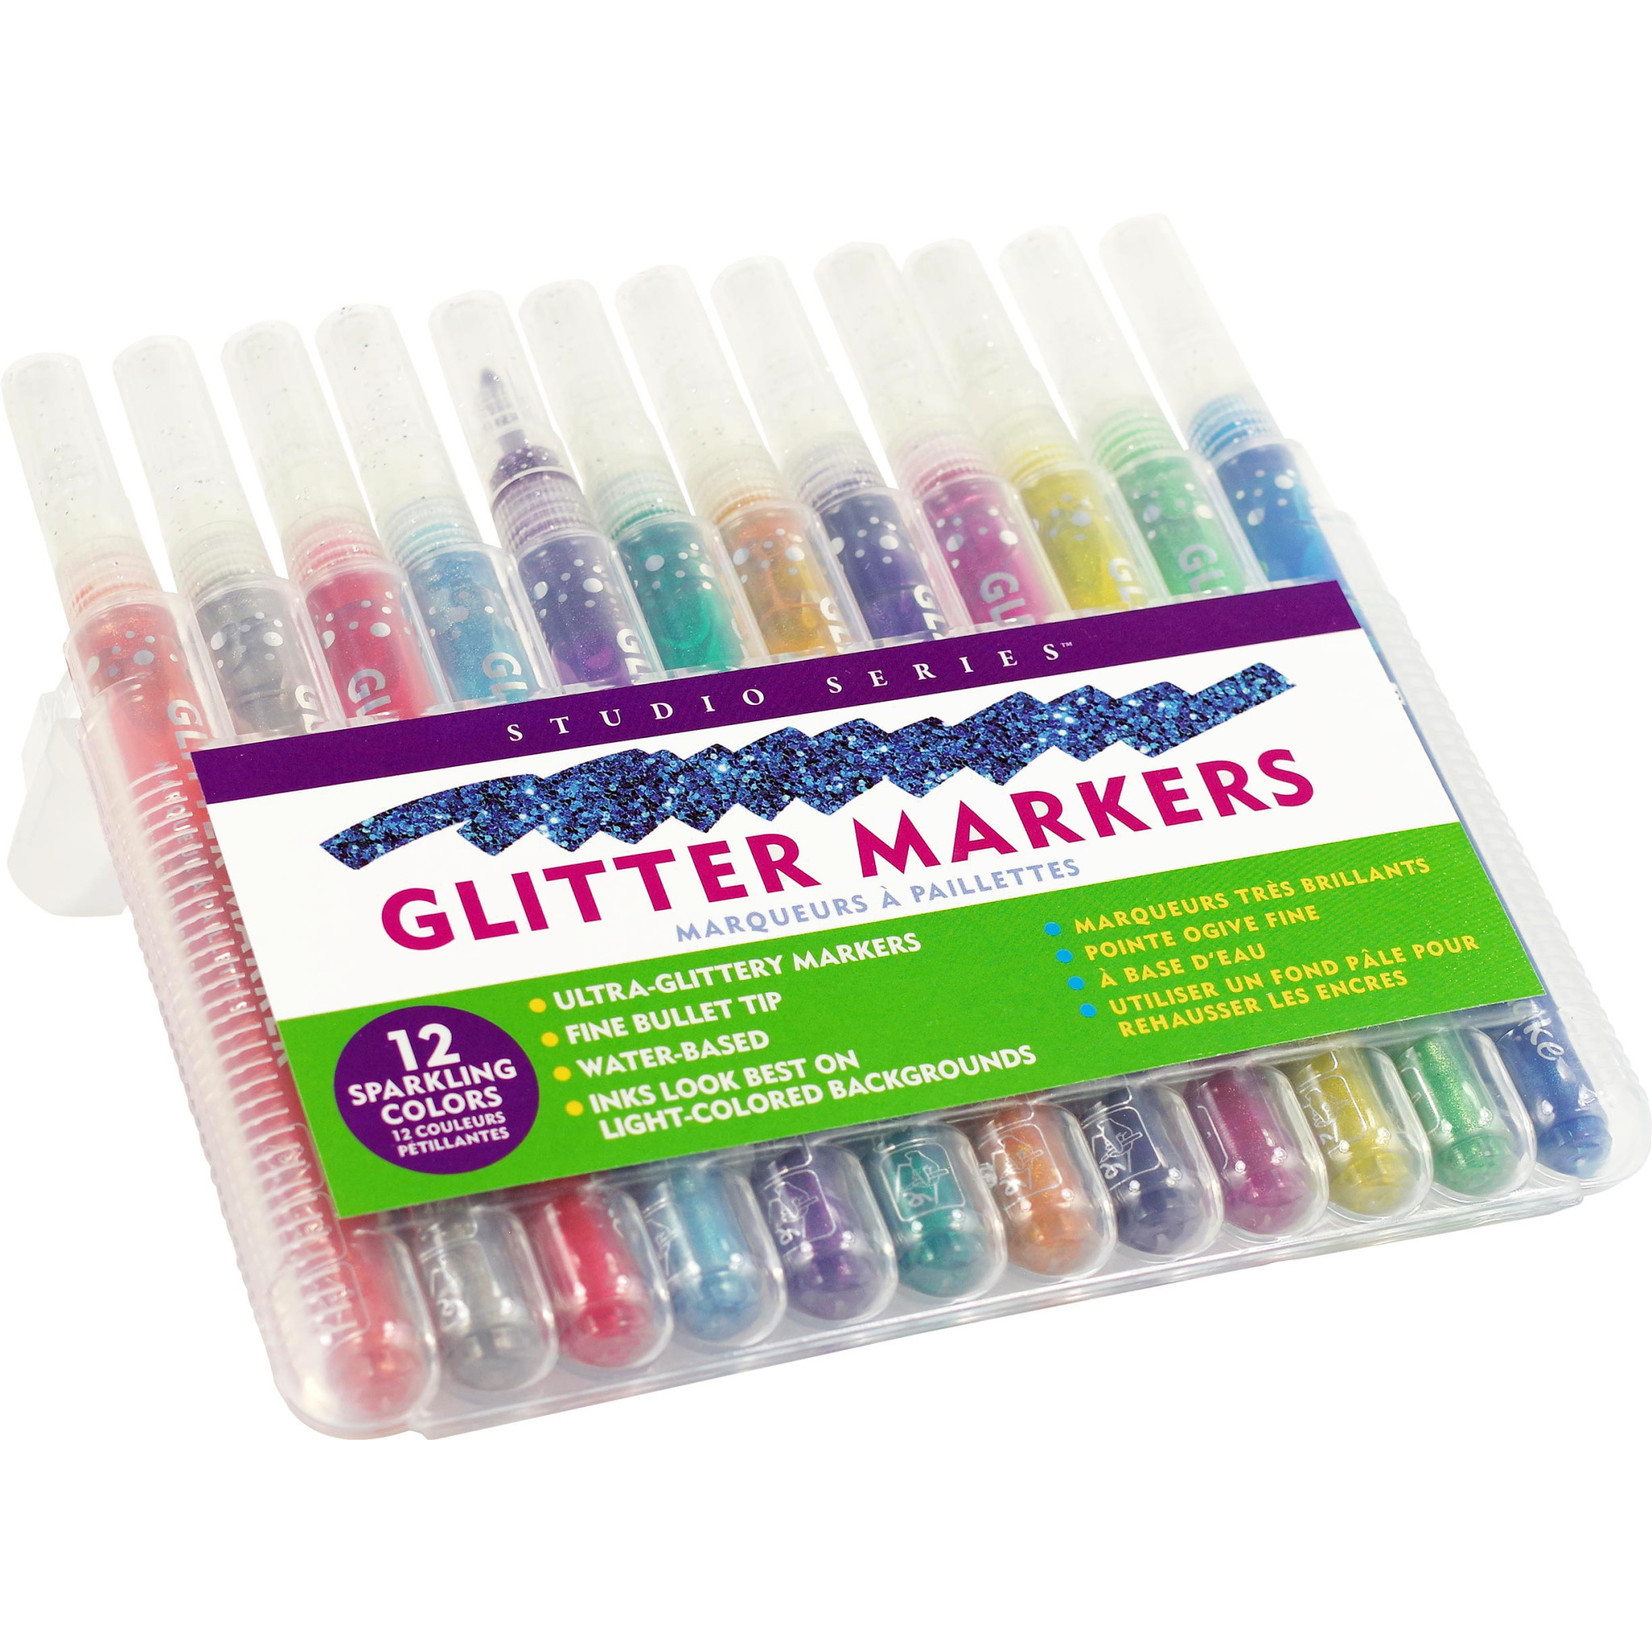 Peter Pauper Press Studio Series - Glitter Marker Set (12-piece set)